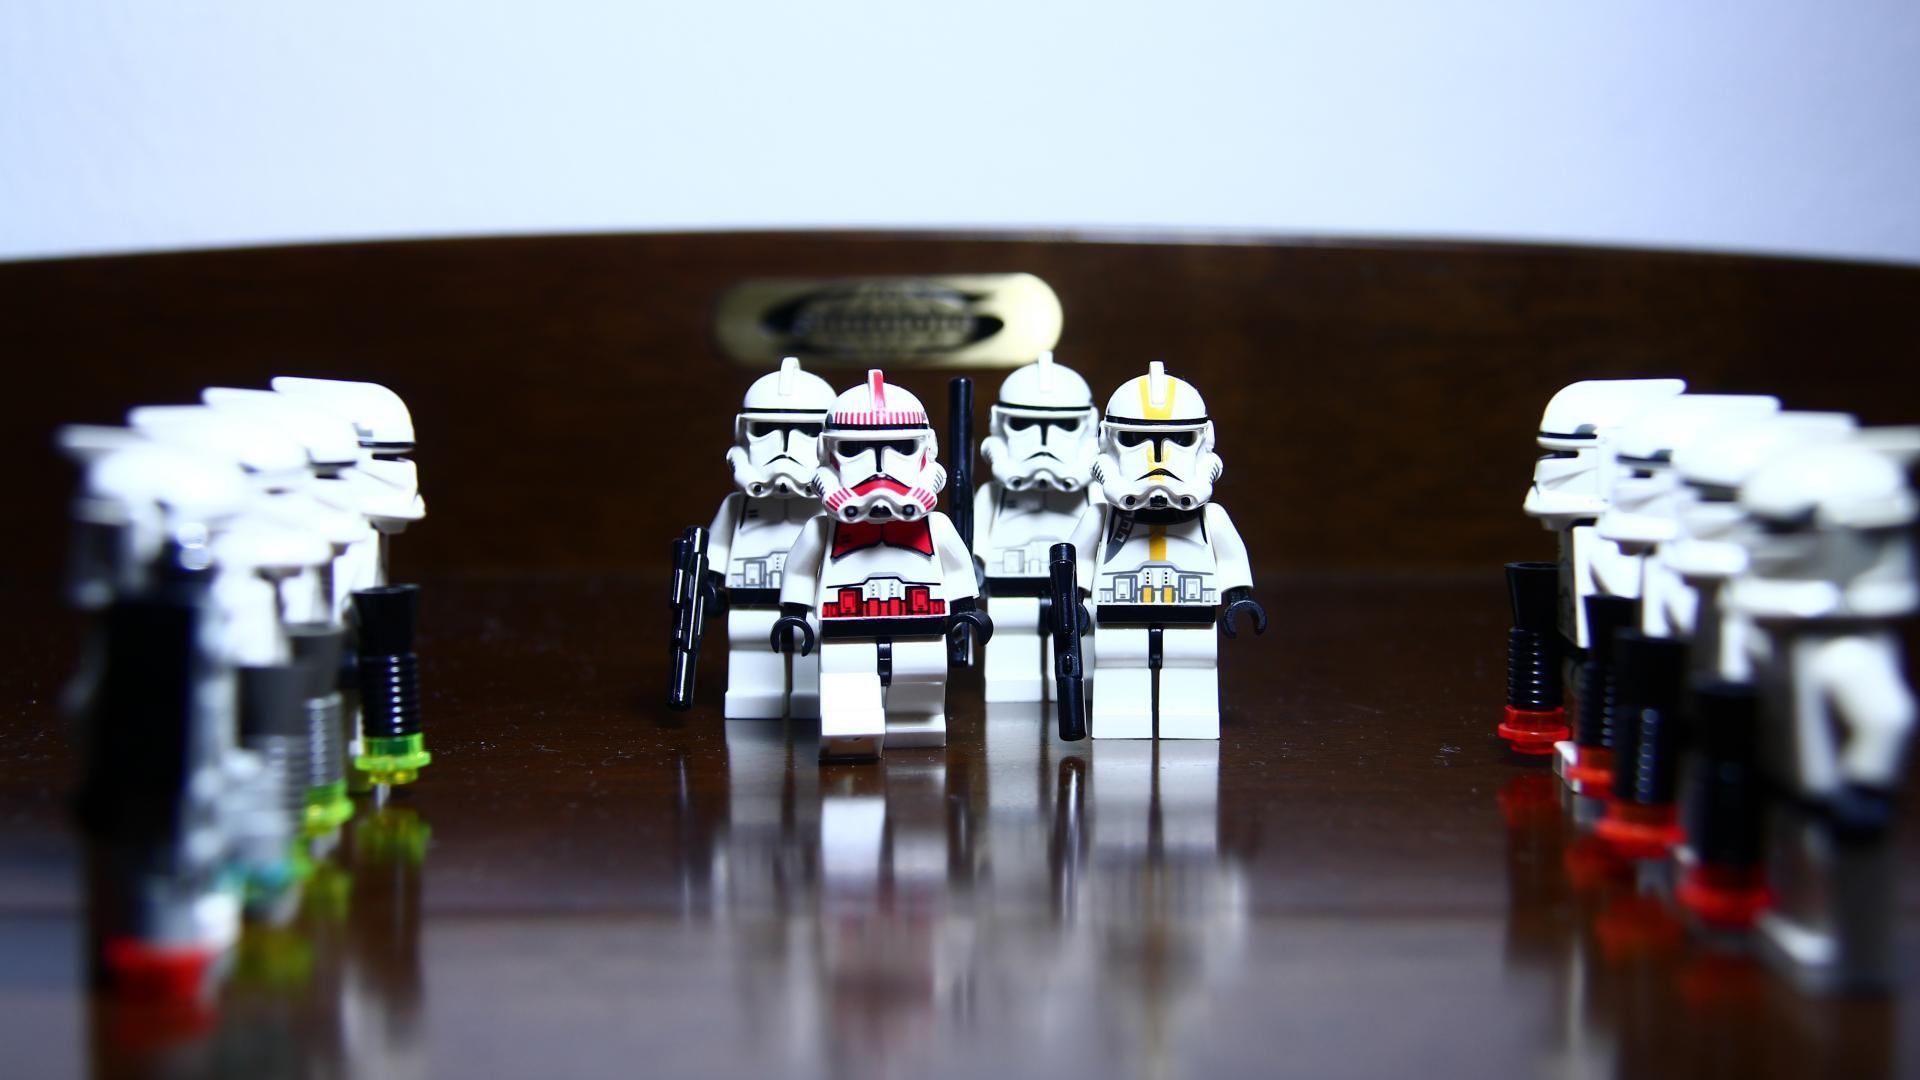 lego star wars the clone wars wallpaper